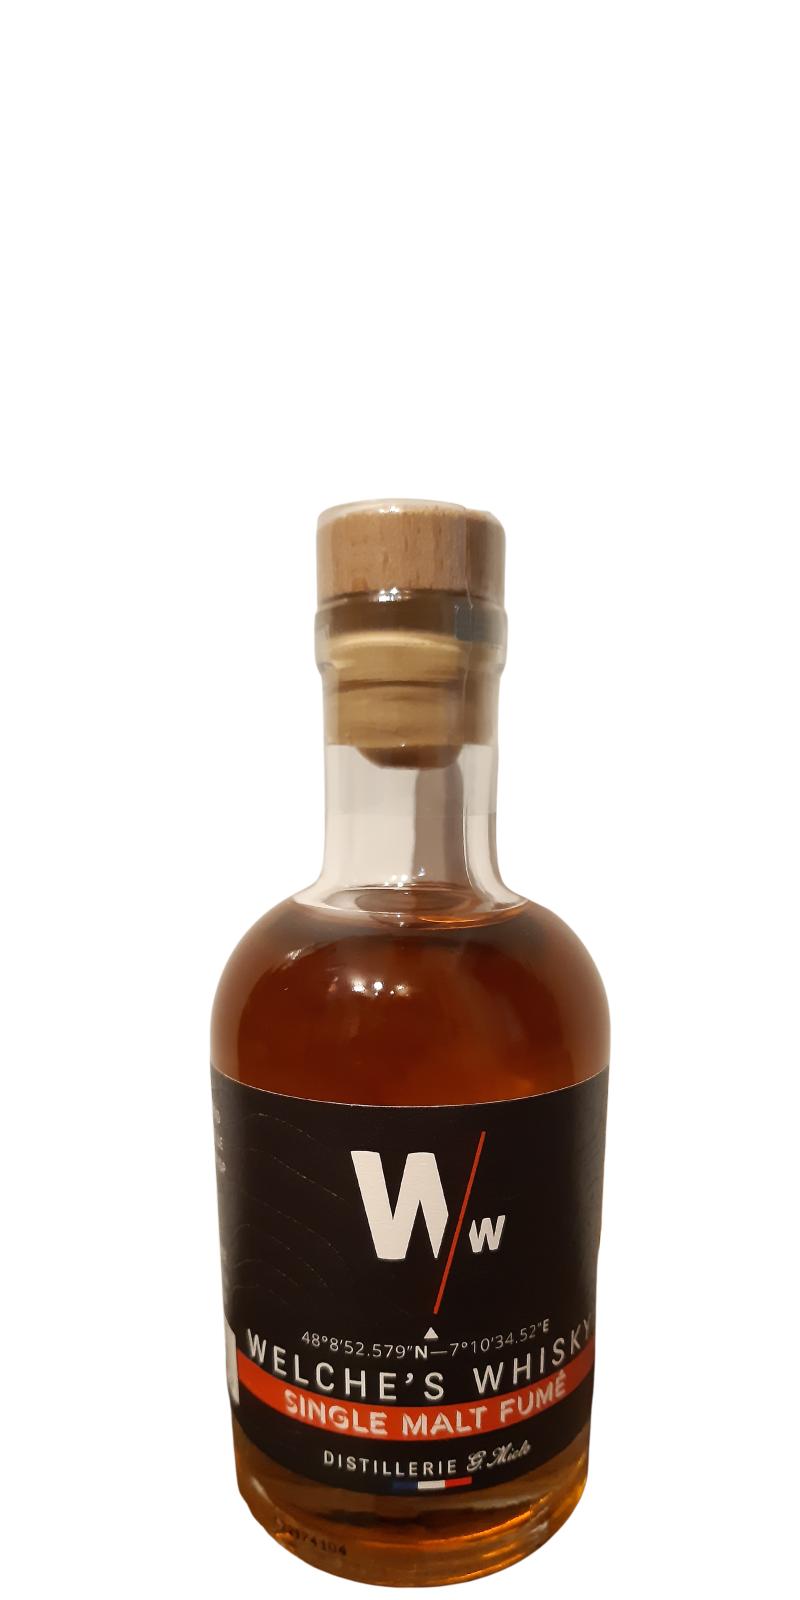 Welche's Whisky Single Malt Fumé 43° - Welche's Whisky